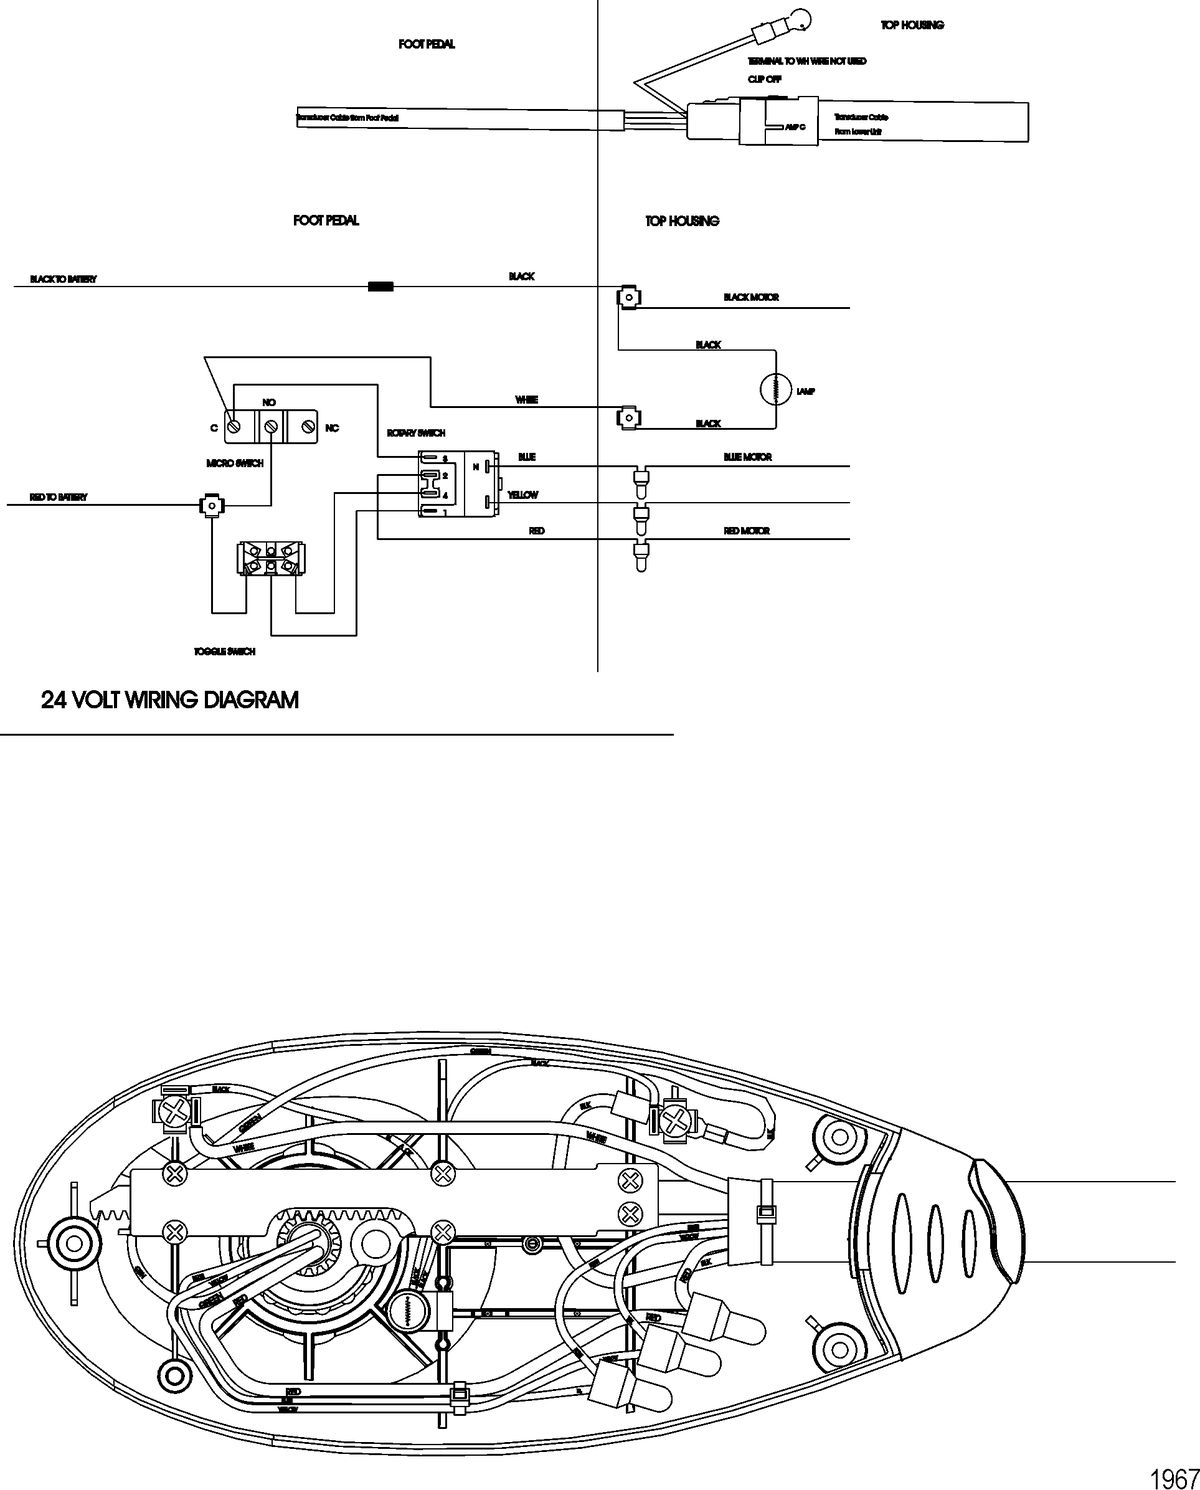 TROLLING MOTOR MOTORGUIDE FRESH WATER SERIES Wire Diagram(Model FW71PFB)